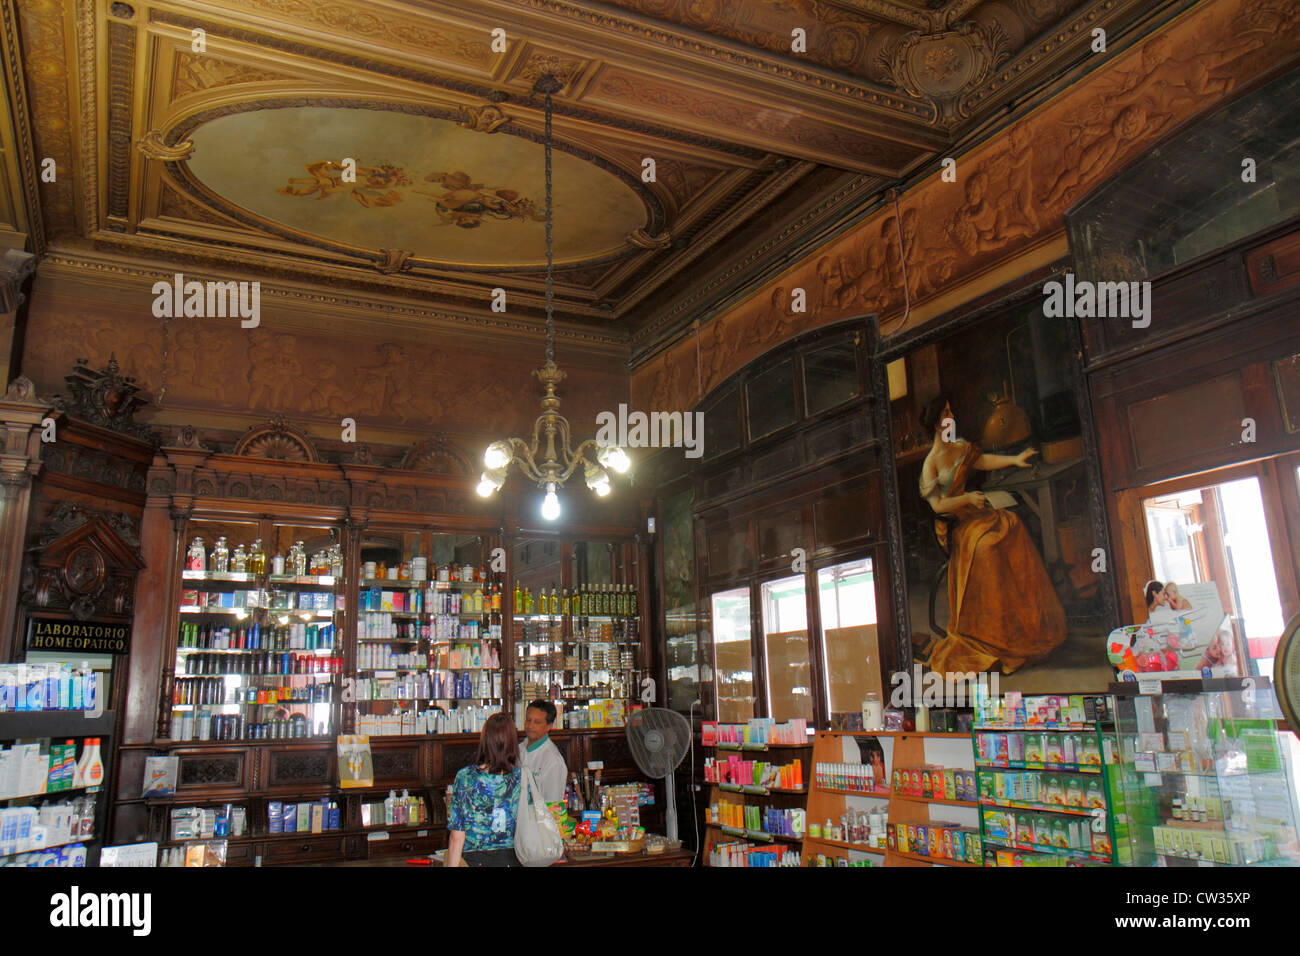 Buenos Aires Argentina,Avenida Adolfo Alsina,Defensa,Farmacia de la Estrella,historic pharmacy,museum,1885,ceiling frescoes,woodwork,chandelier,painti Stock Photo